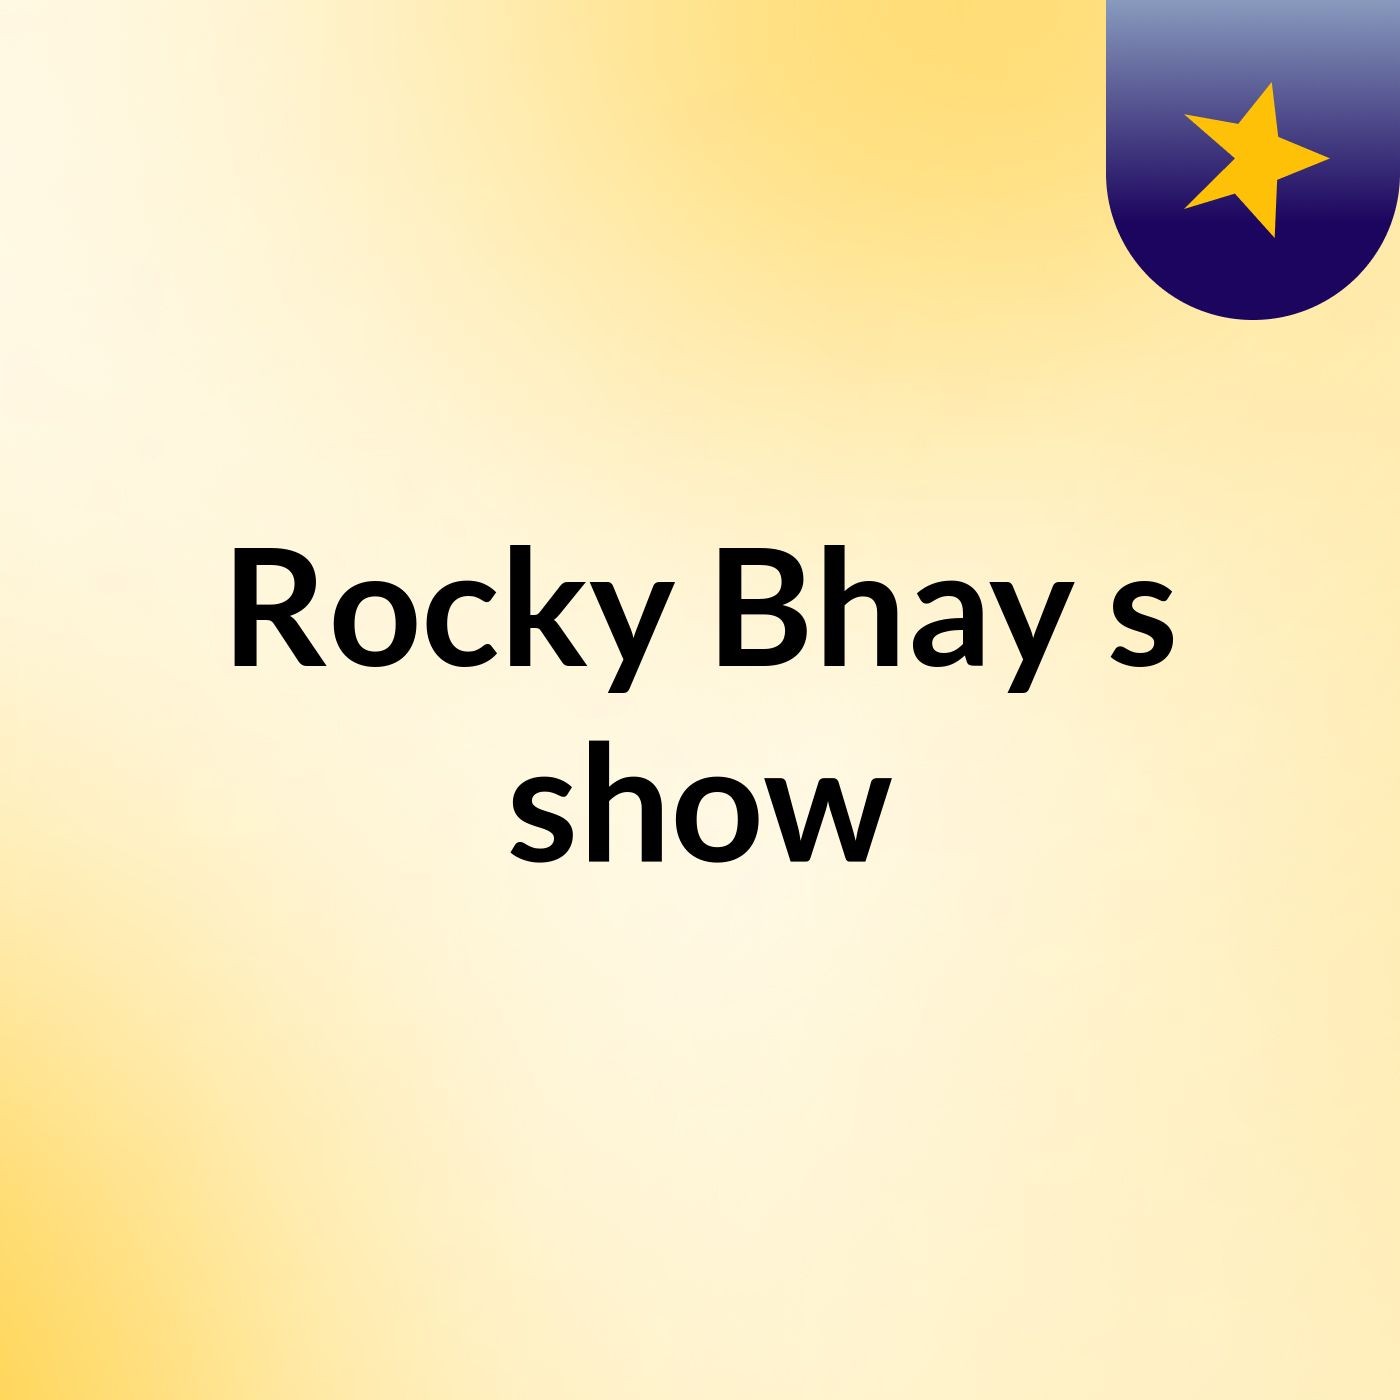 Rocky Bhay's show